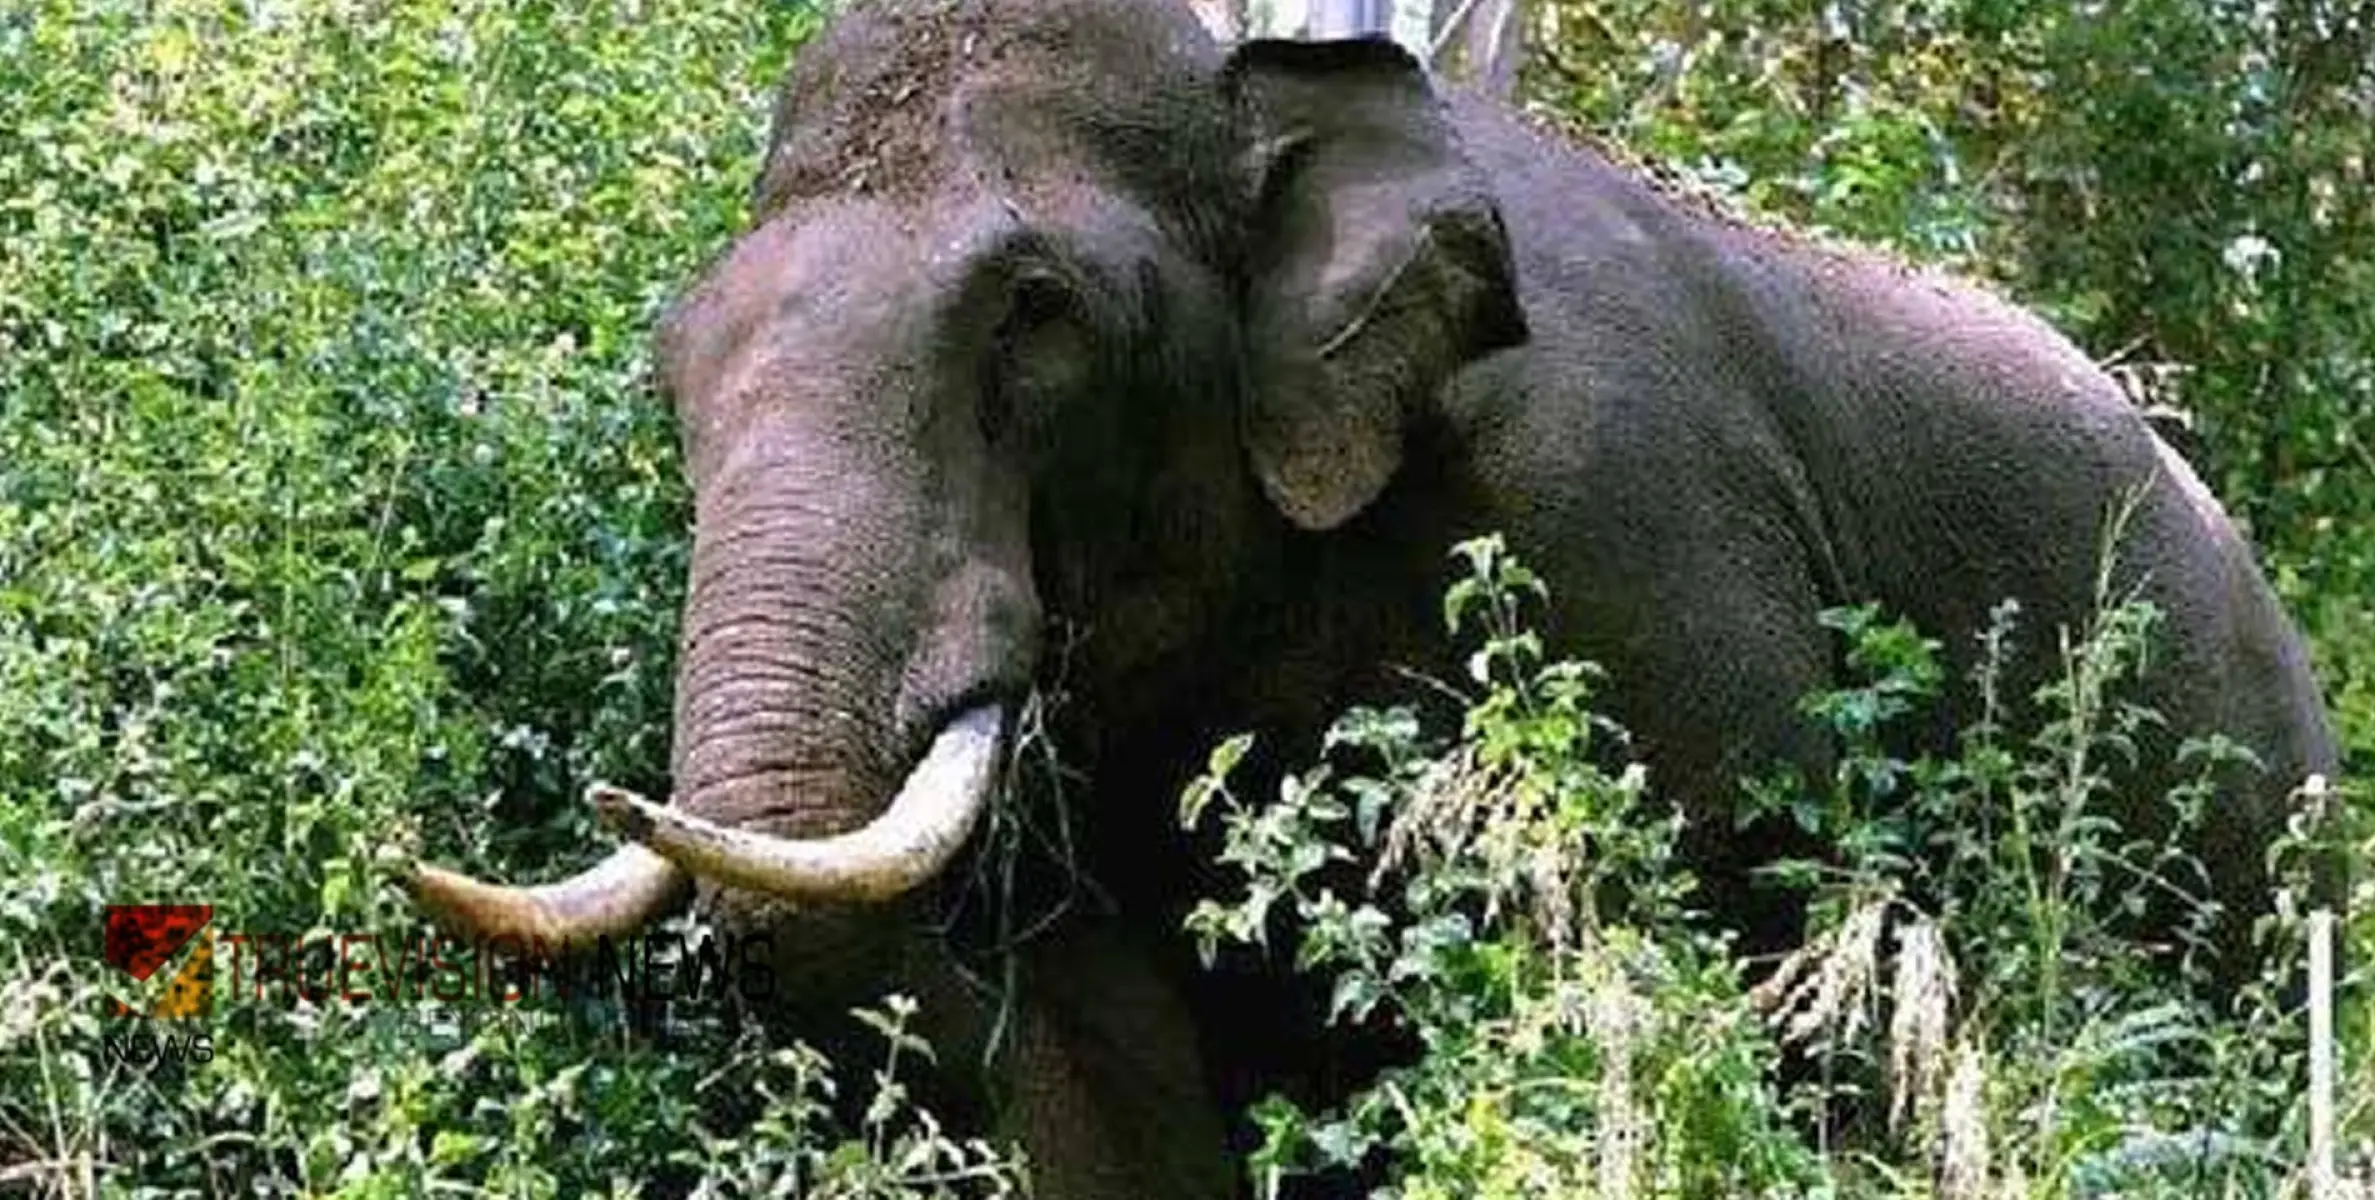 #wildelephant | സഫാരി വാഹനത്തിന് പിന്നാലെ കാട്ടാന; വണ്ടി മറിച്ചിട്ടു, 80കാരിയ്ക്ക് ദാരുണാന്ത്യം, 5 പേർക്ക് പരിക്ക്